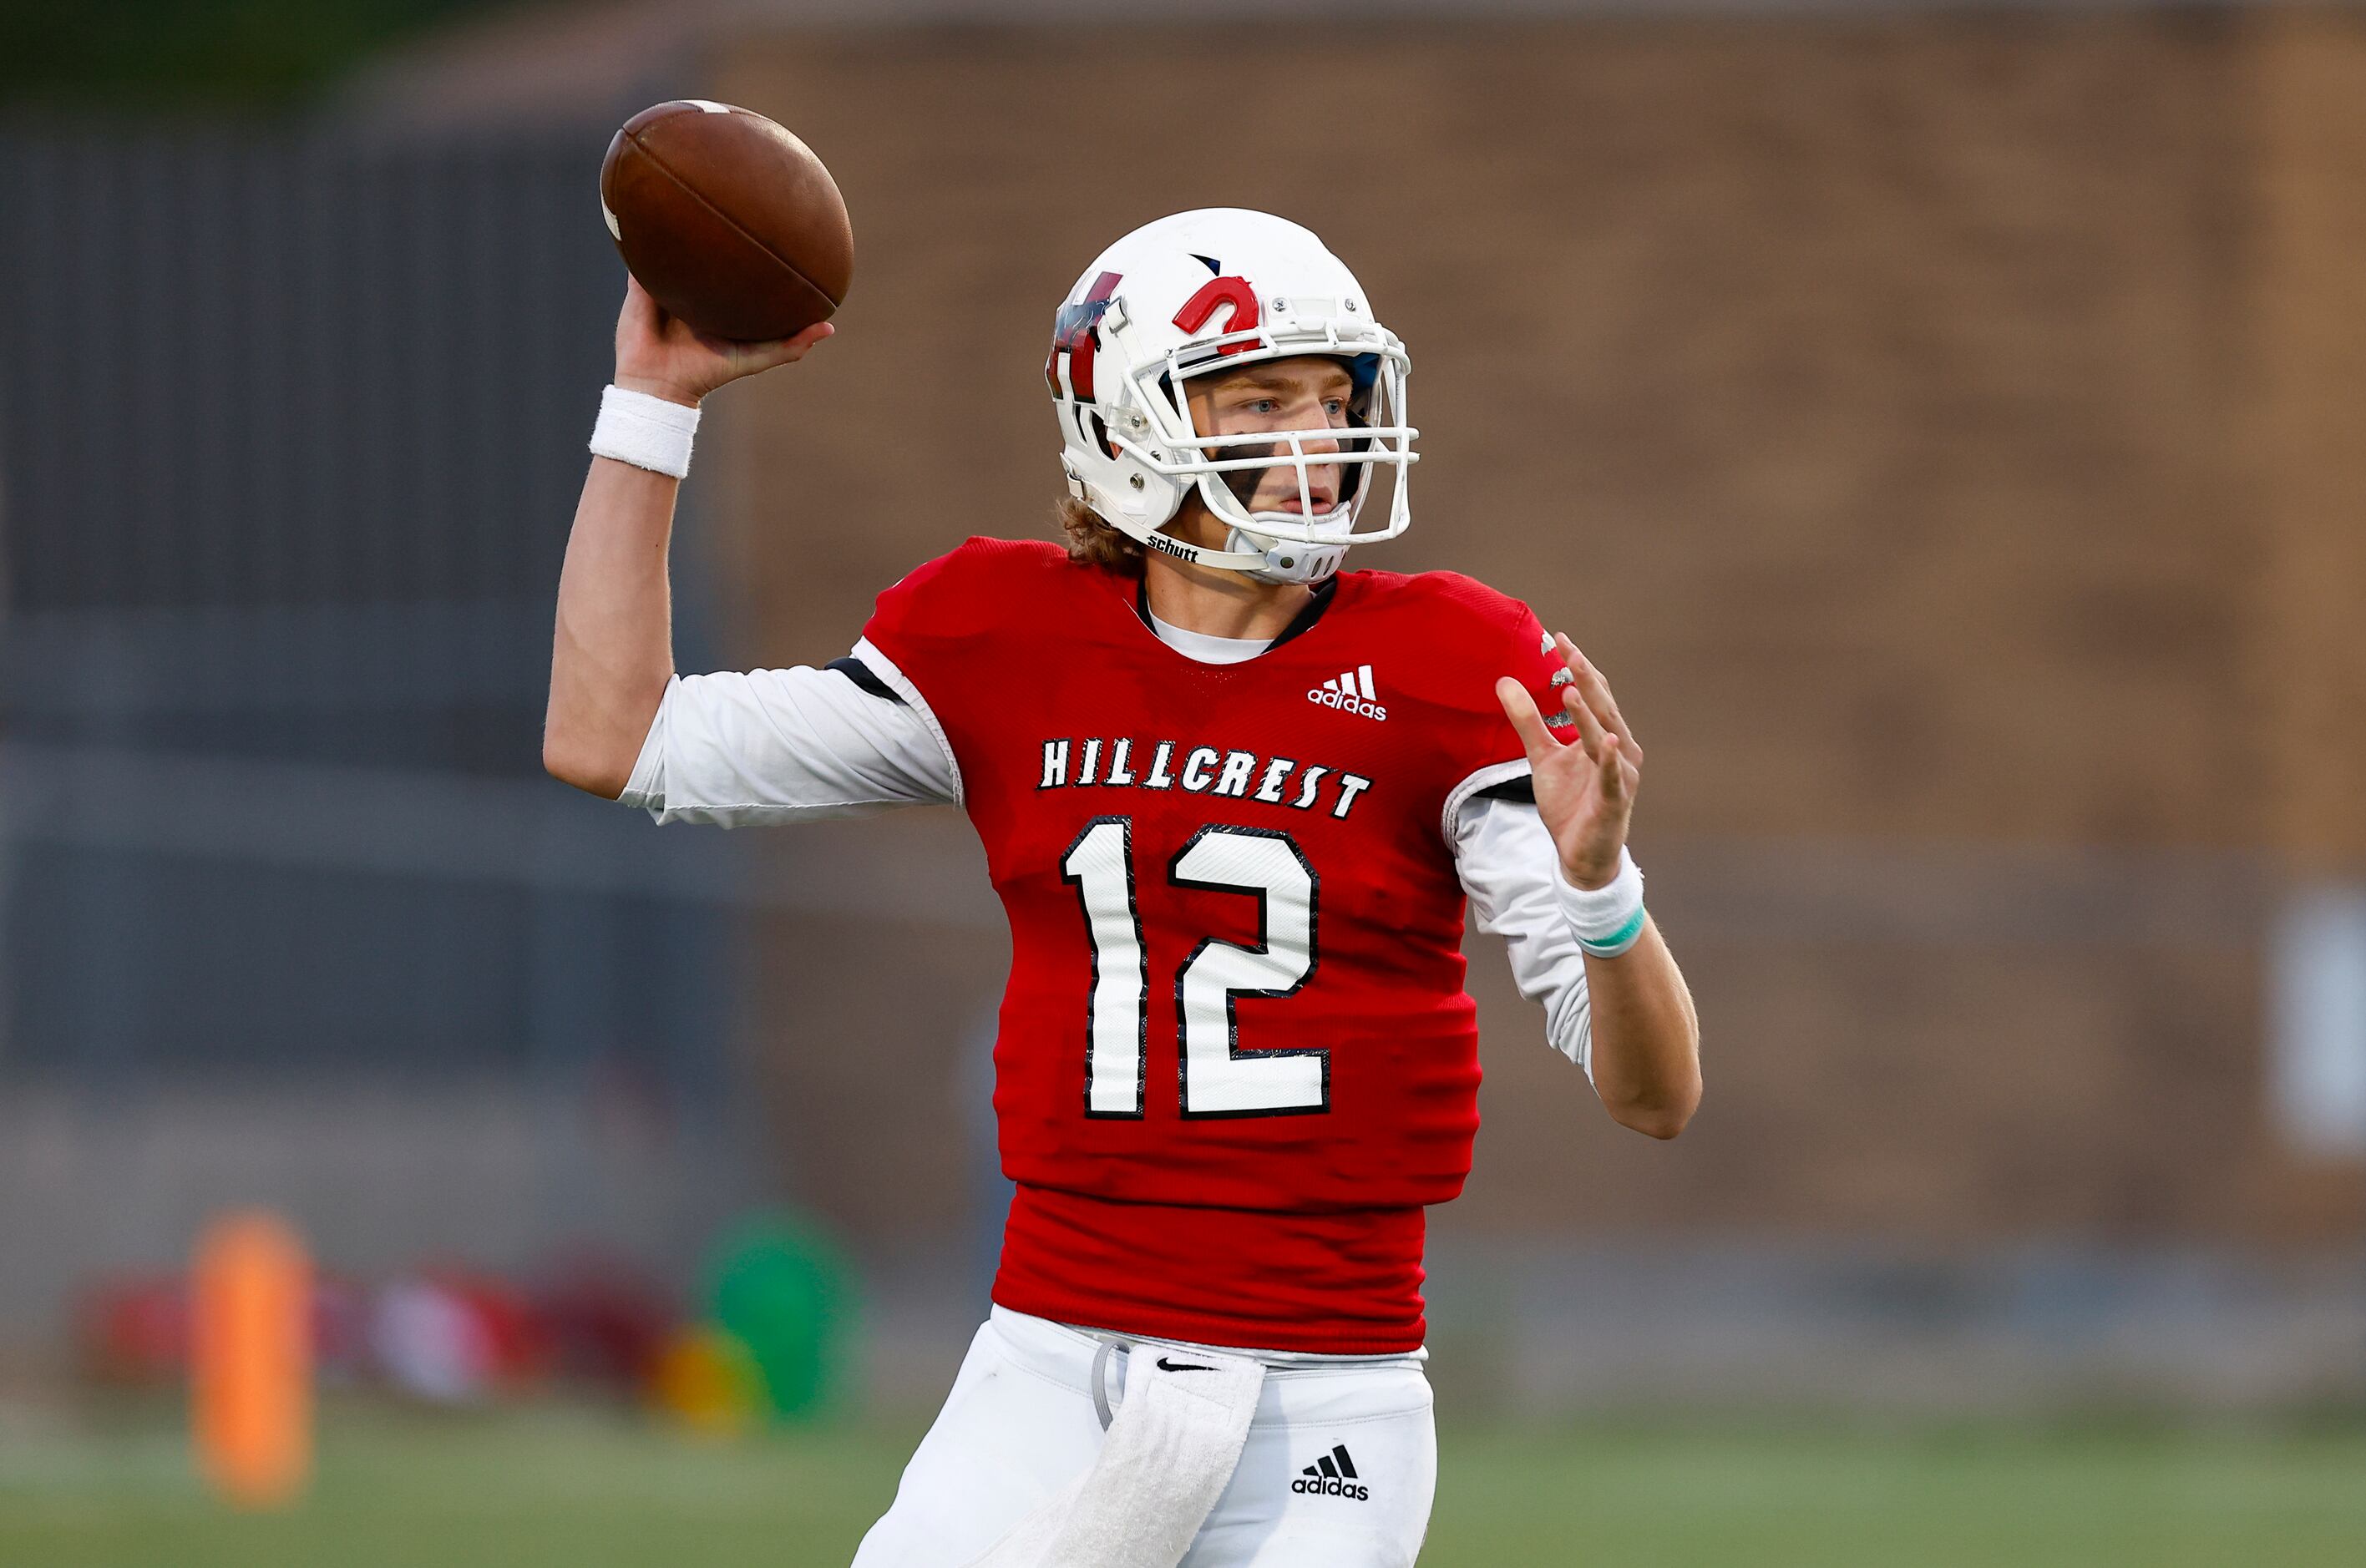 Hillcrest junior quarterback Luke Monter (12) throws during the first half of a high school...